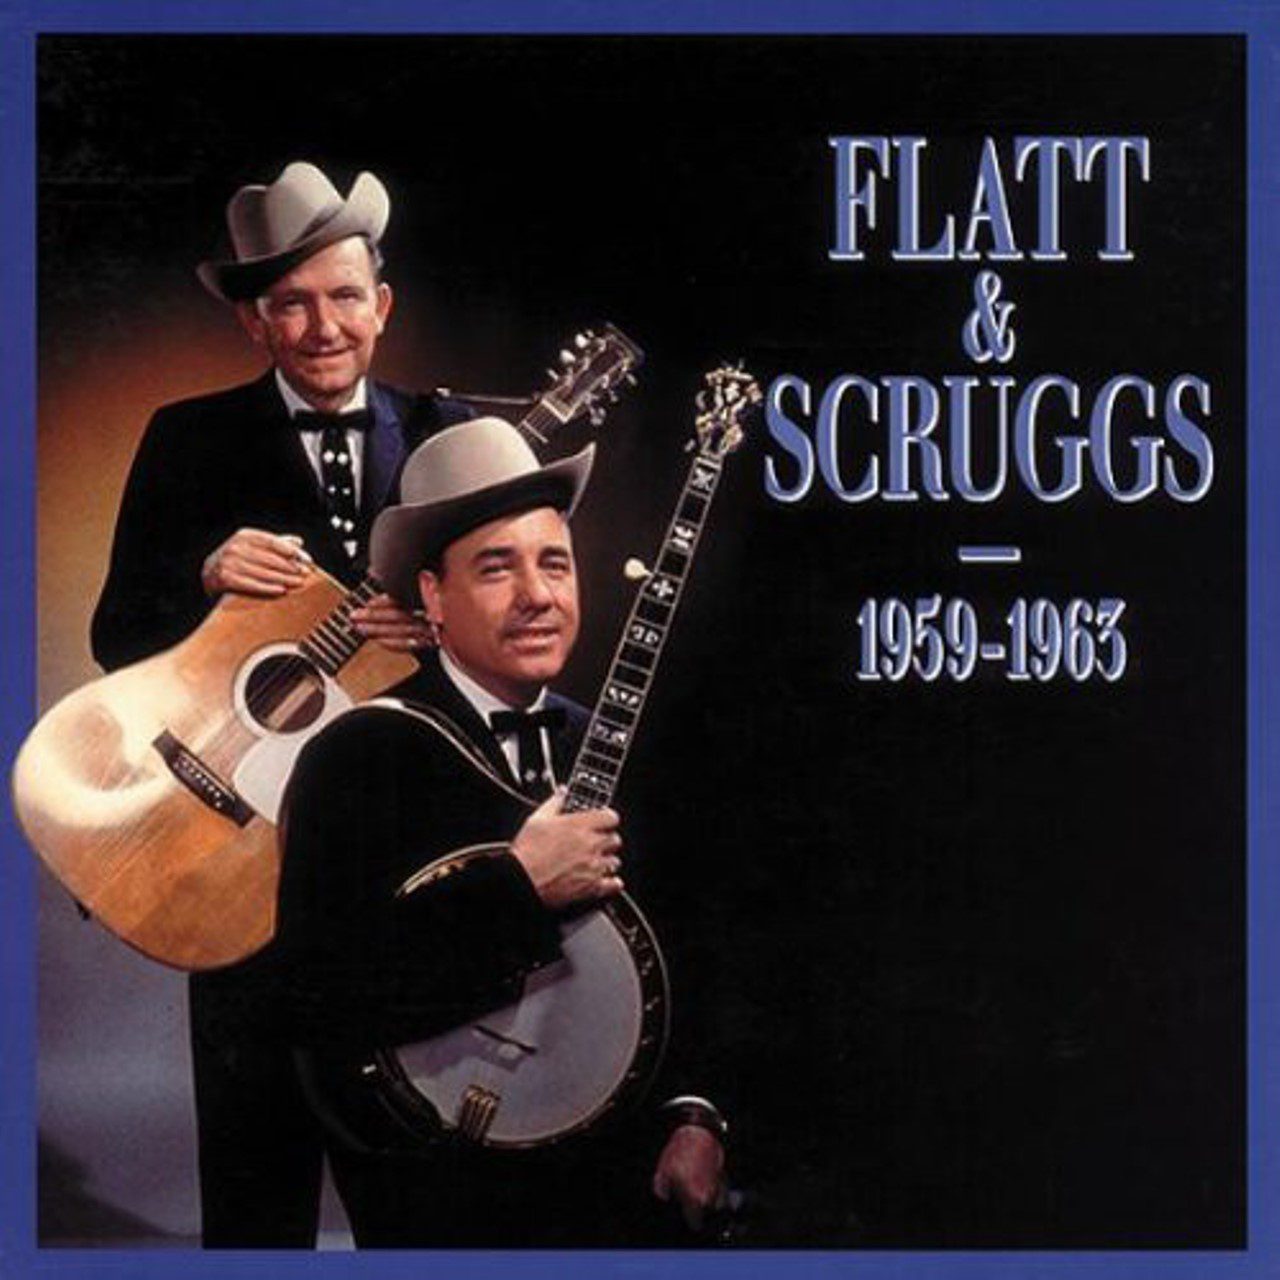 Lester Flatt, Earl Scruggs & The Foggy Mountain Boys – Flatt And Scruggs 1959-1963 cover album